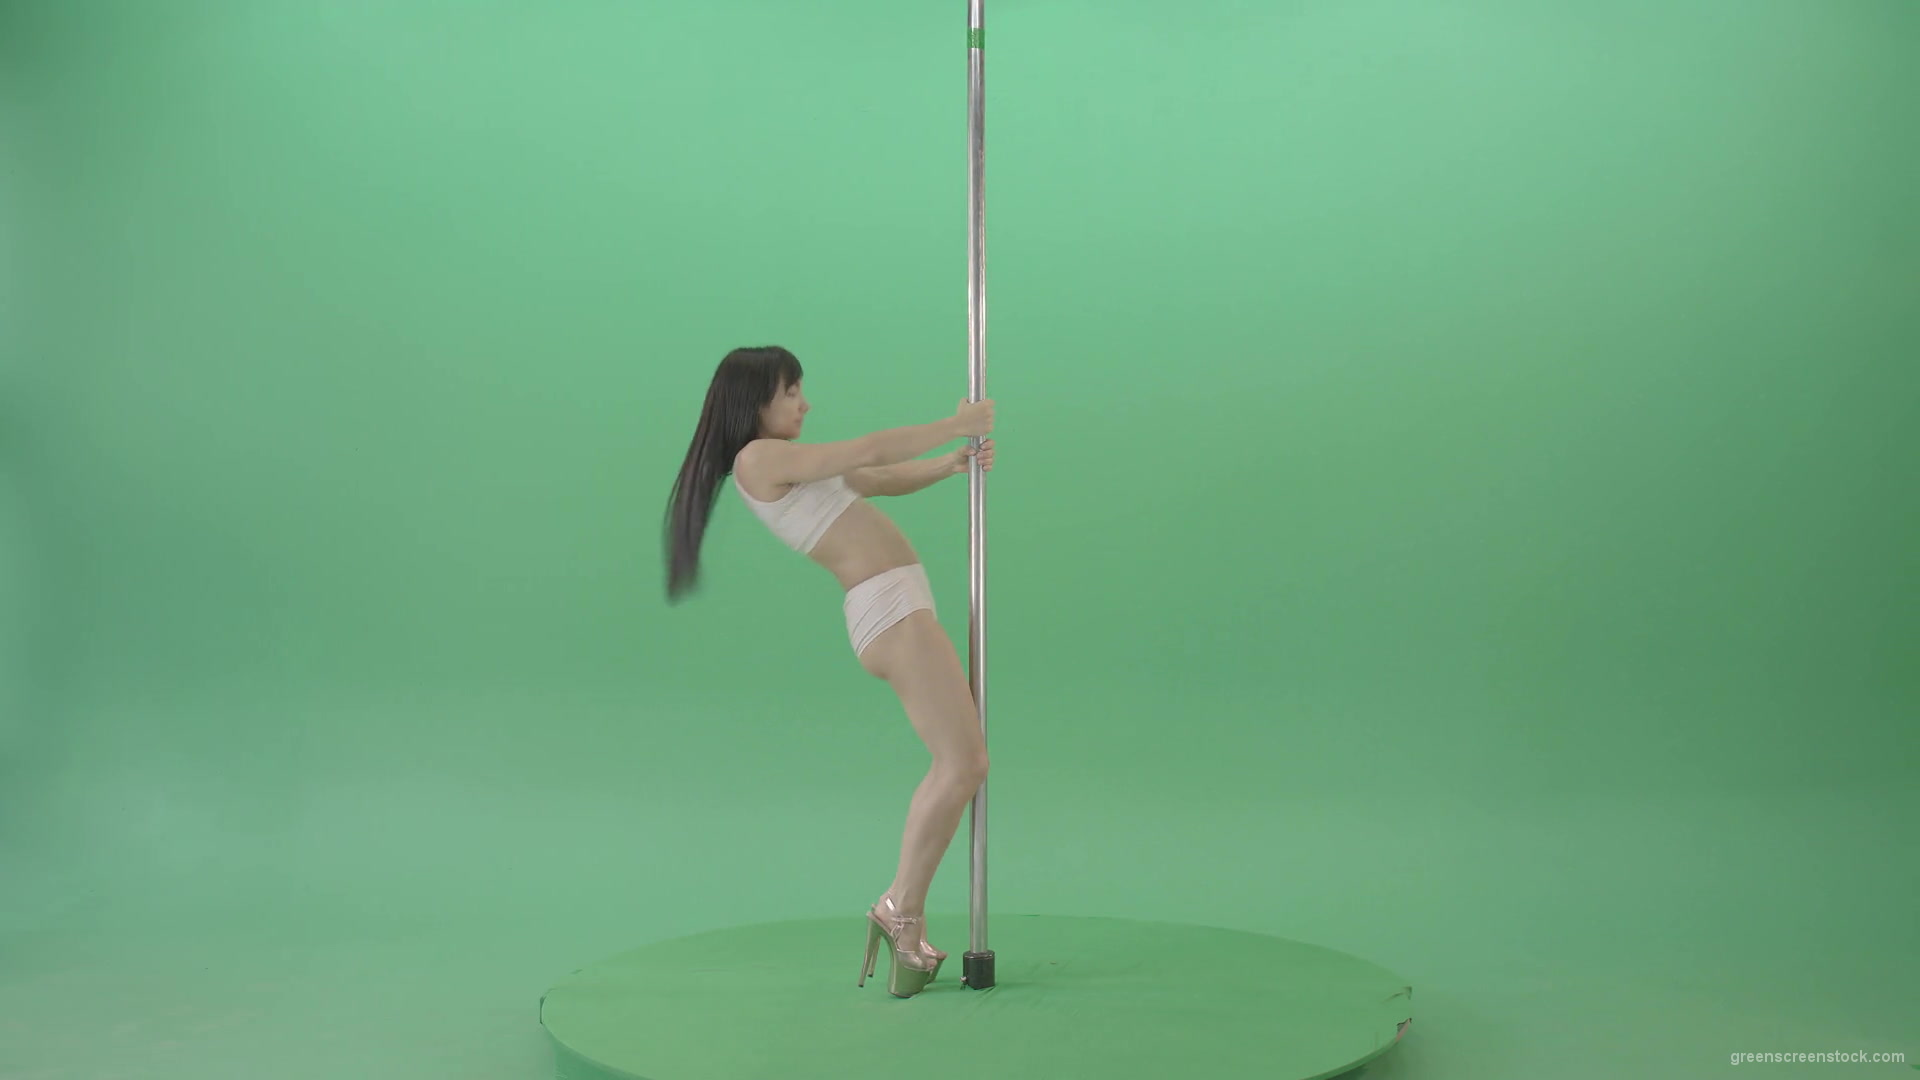 Pole-Dancing-Girl-waving-with-body-on-green-screen-4K-Video-Footage-1920_009 Green Screen Stock